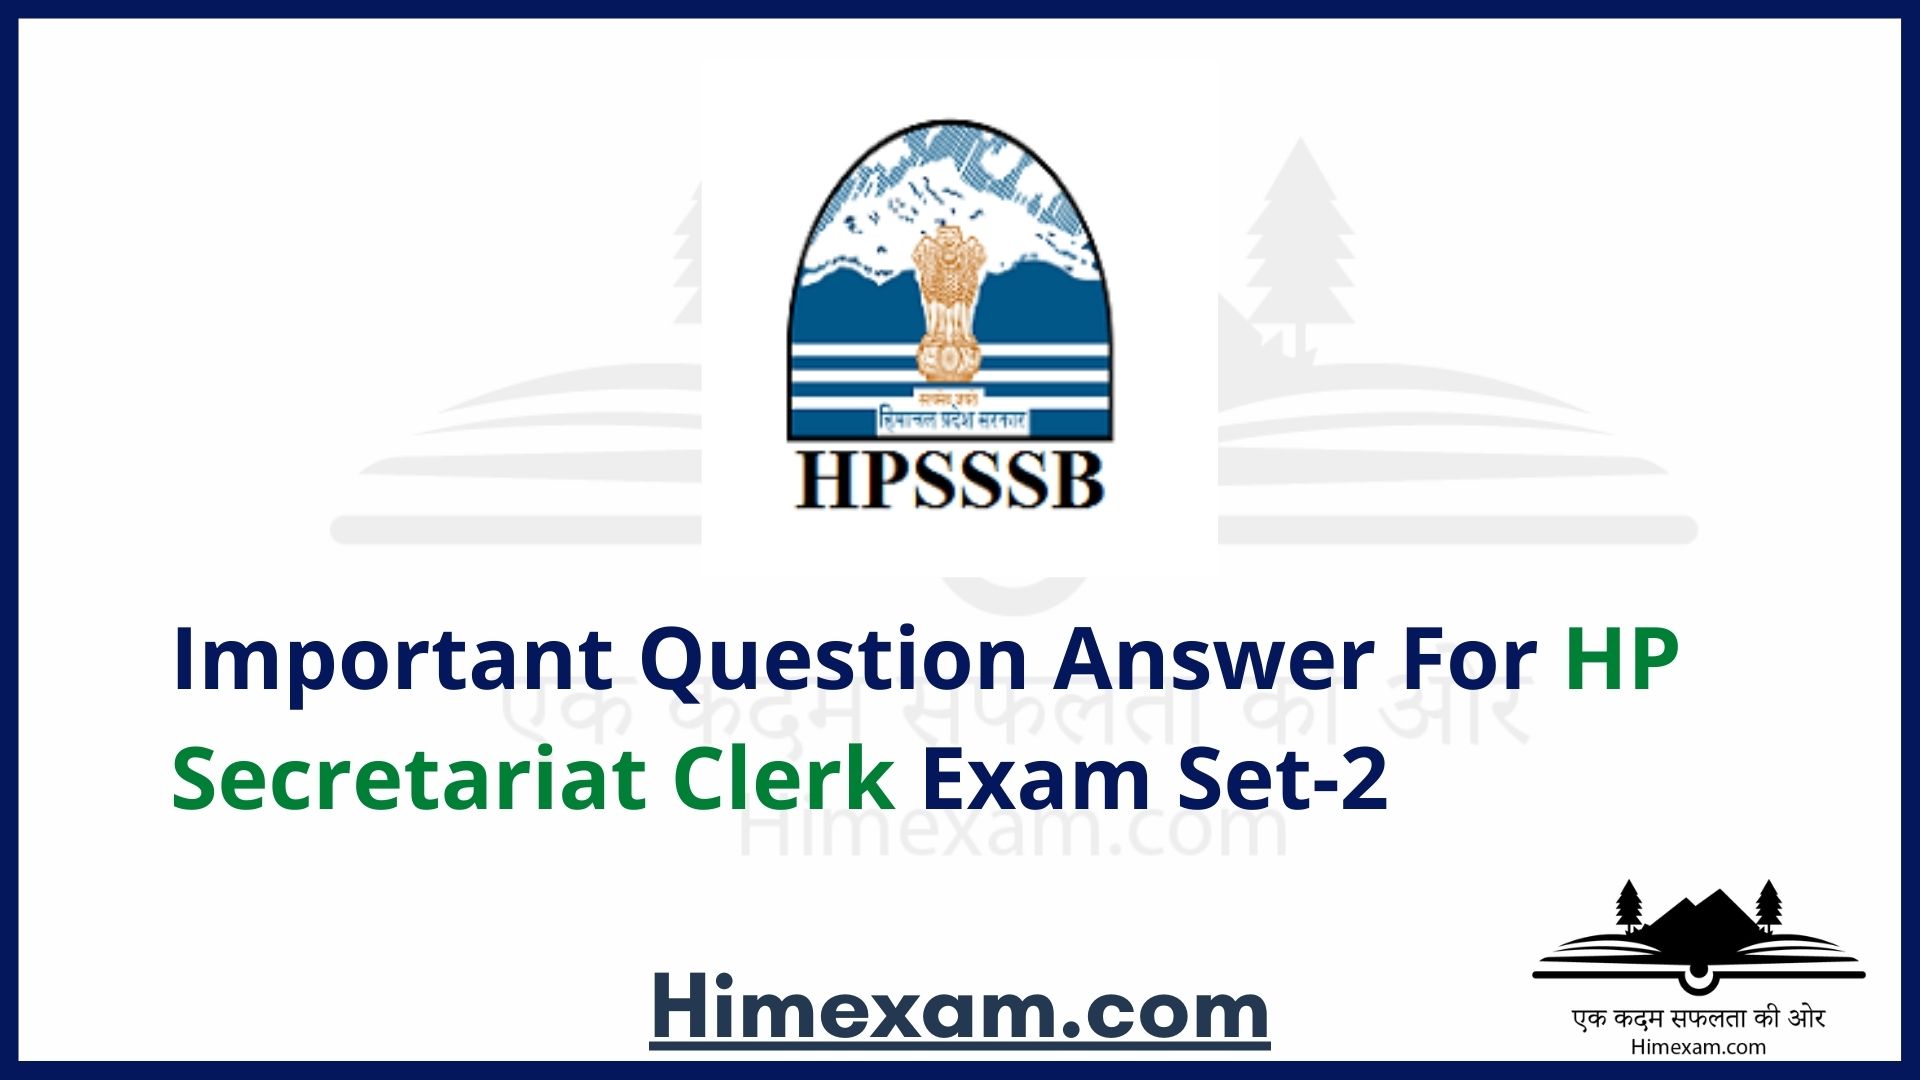 Important Question Answer For HP Secretariat Clerk Exam Set-2